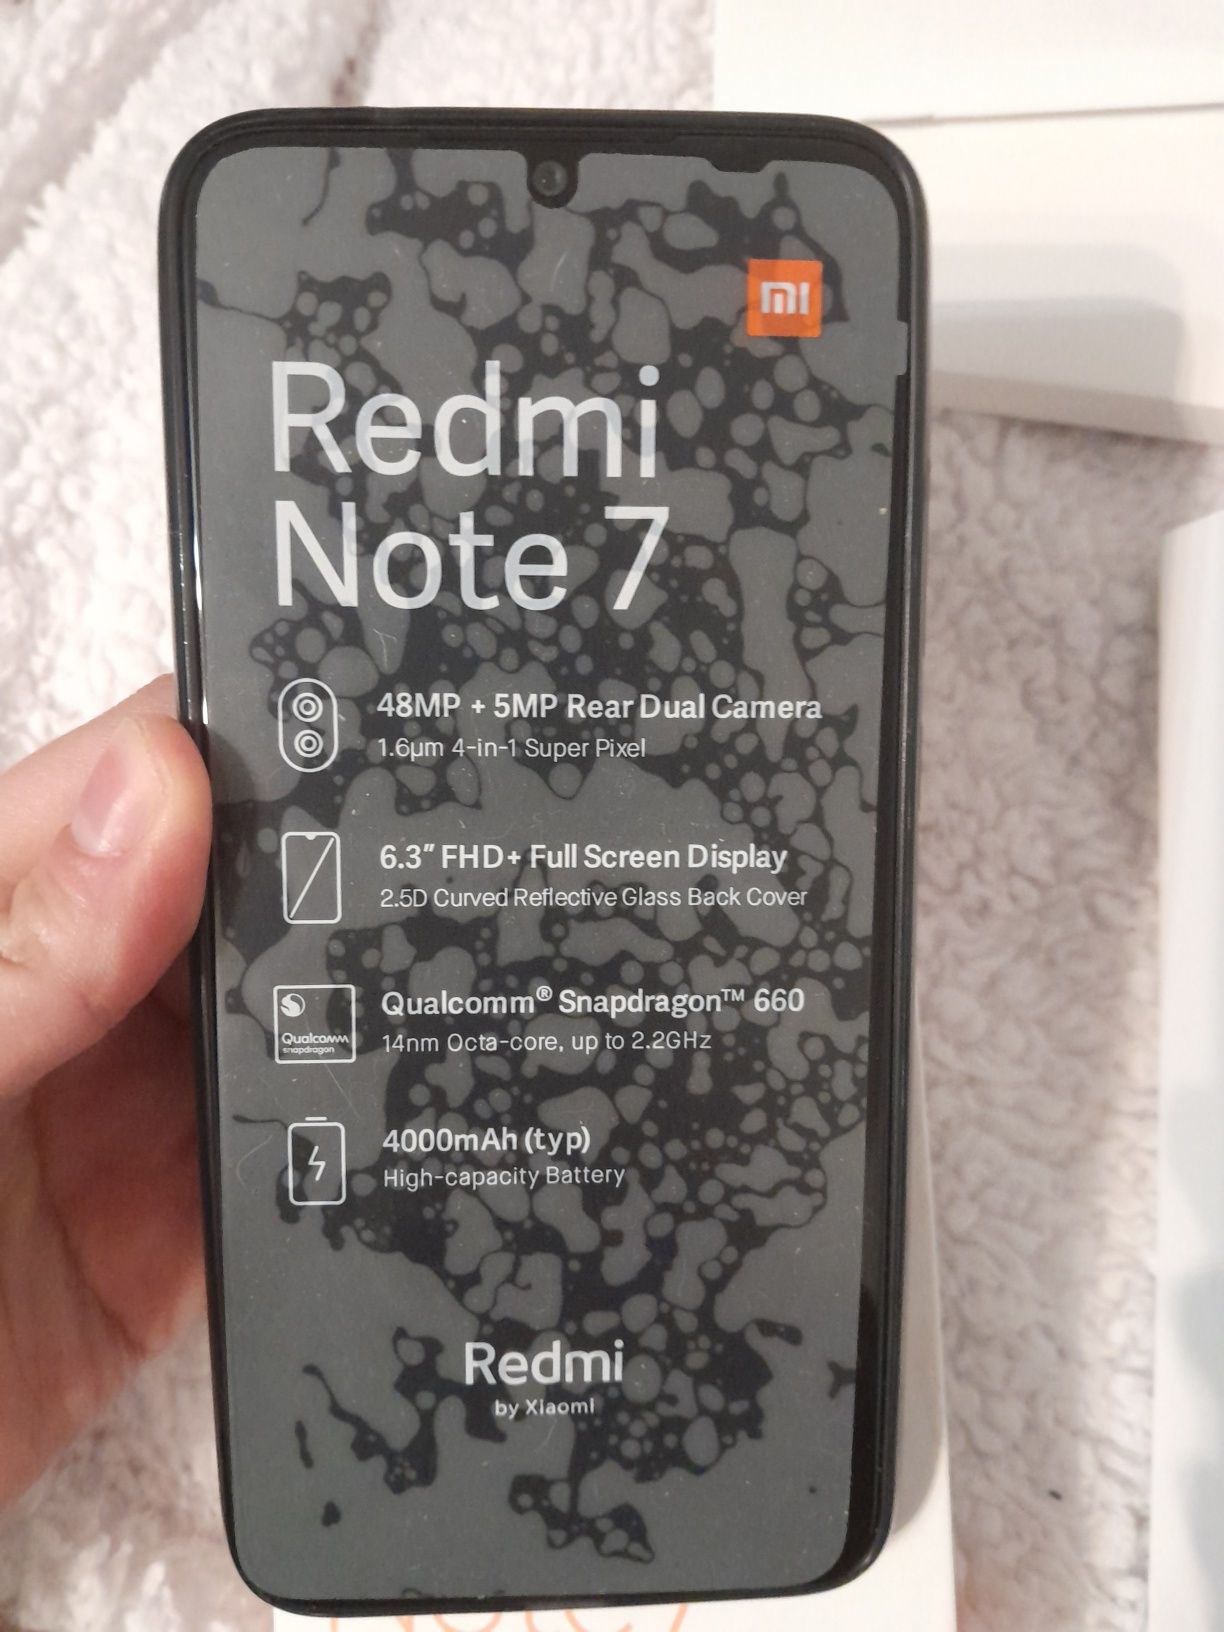 Redmi Note 7 by Xiaomi